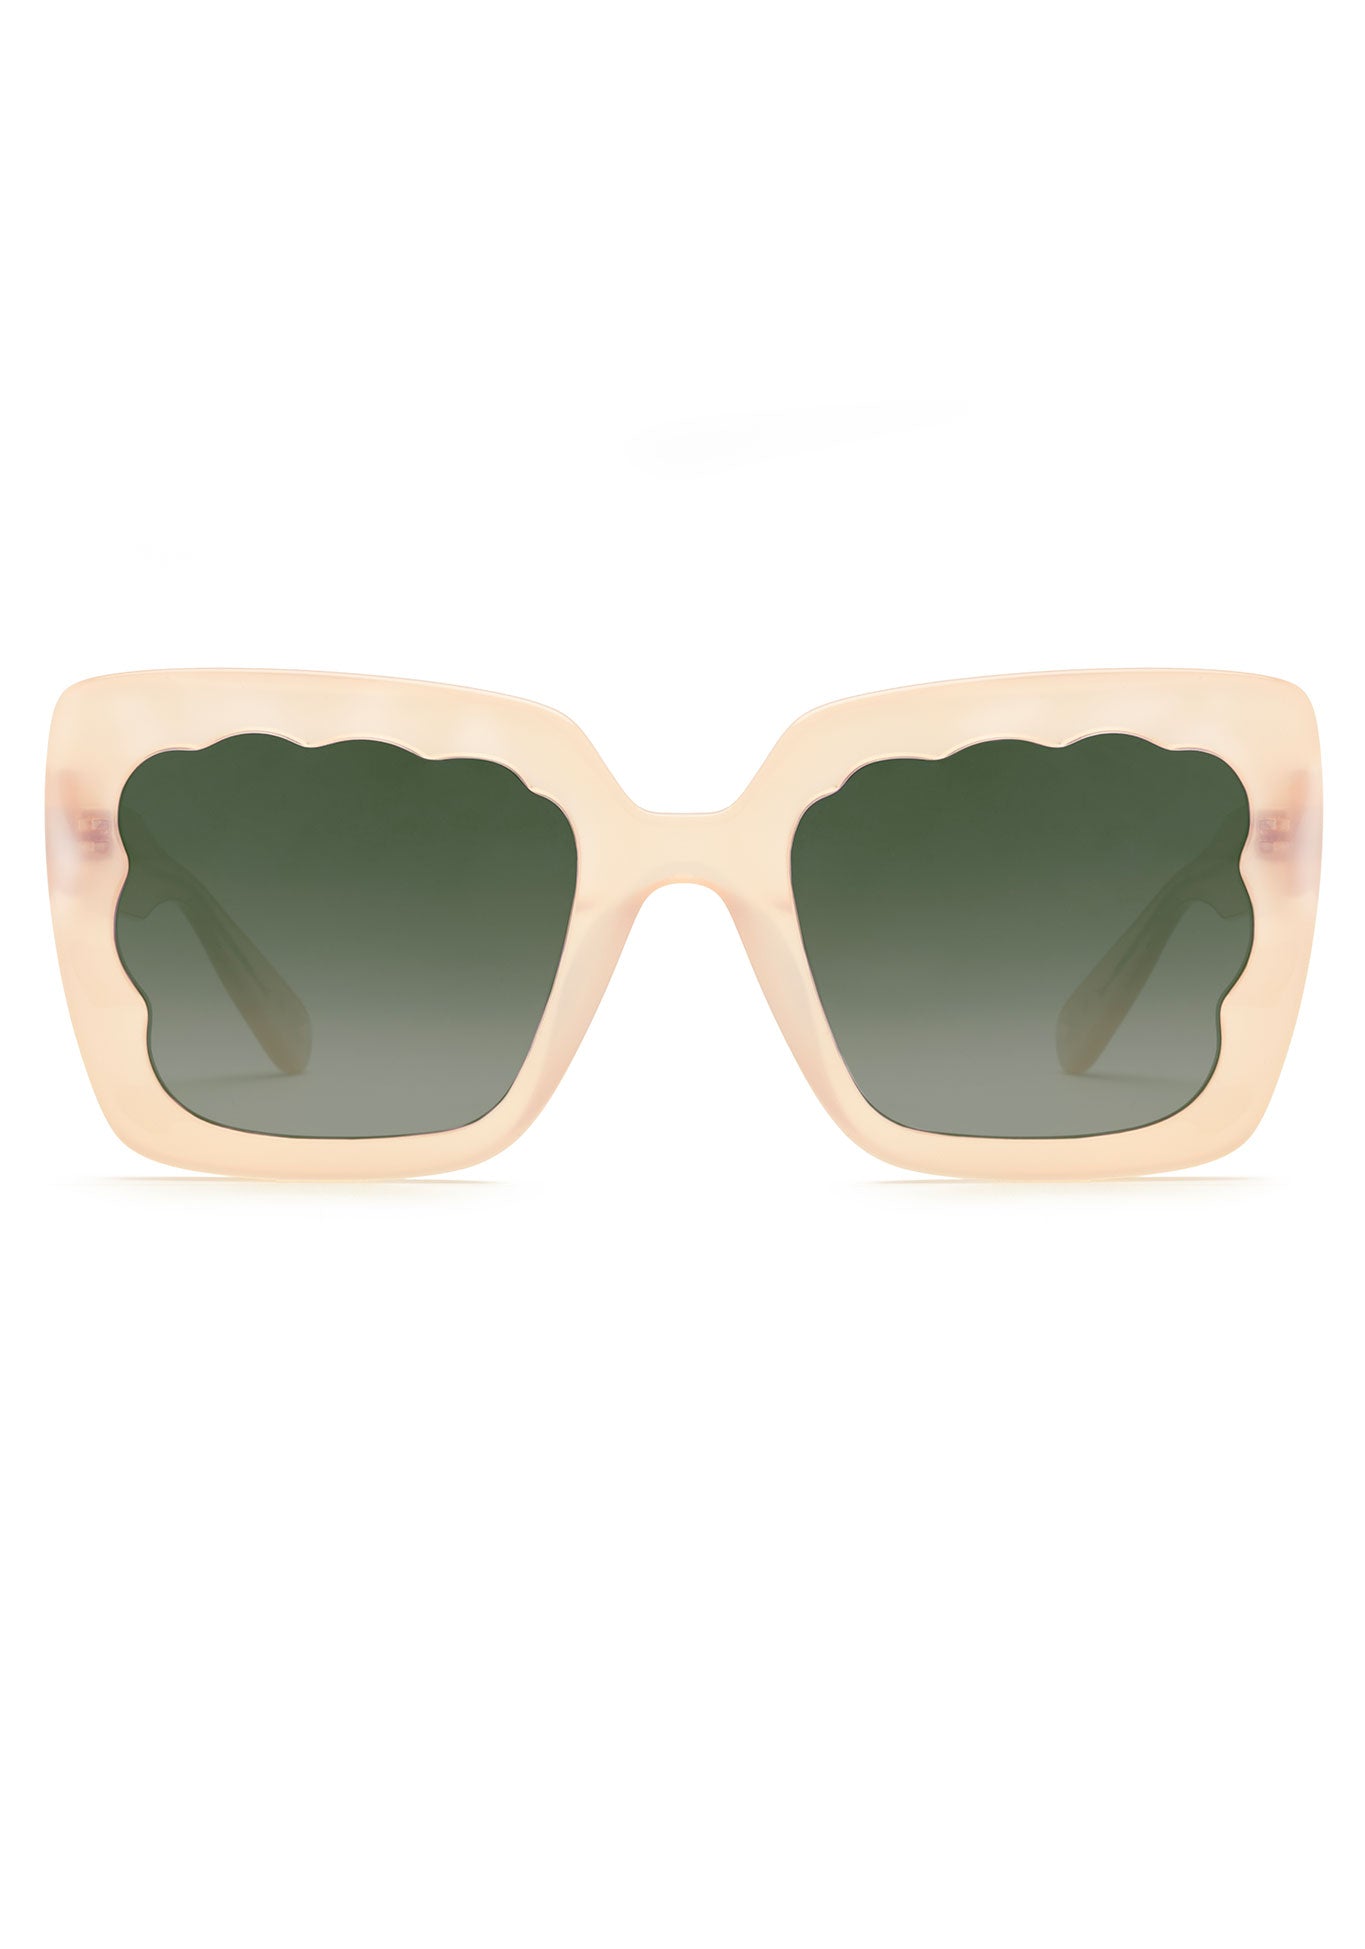 KREWE SUNGLASSES - ELIZABETH | Iridescent Blonde Mirrored luxury, handcrafted blonde acetate scalloped sunglasses